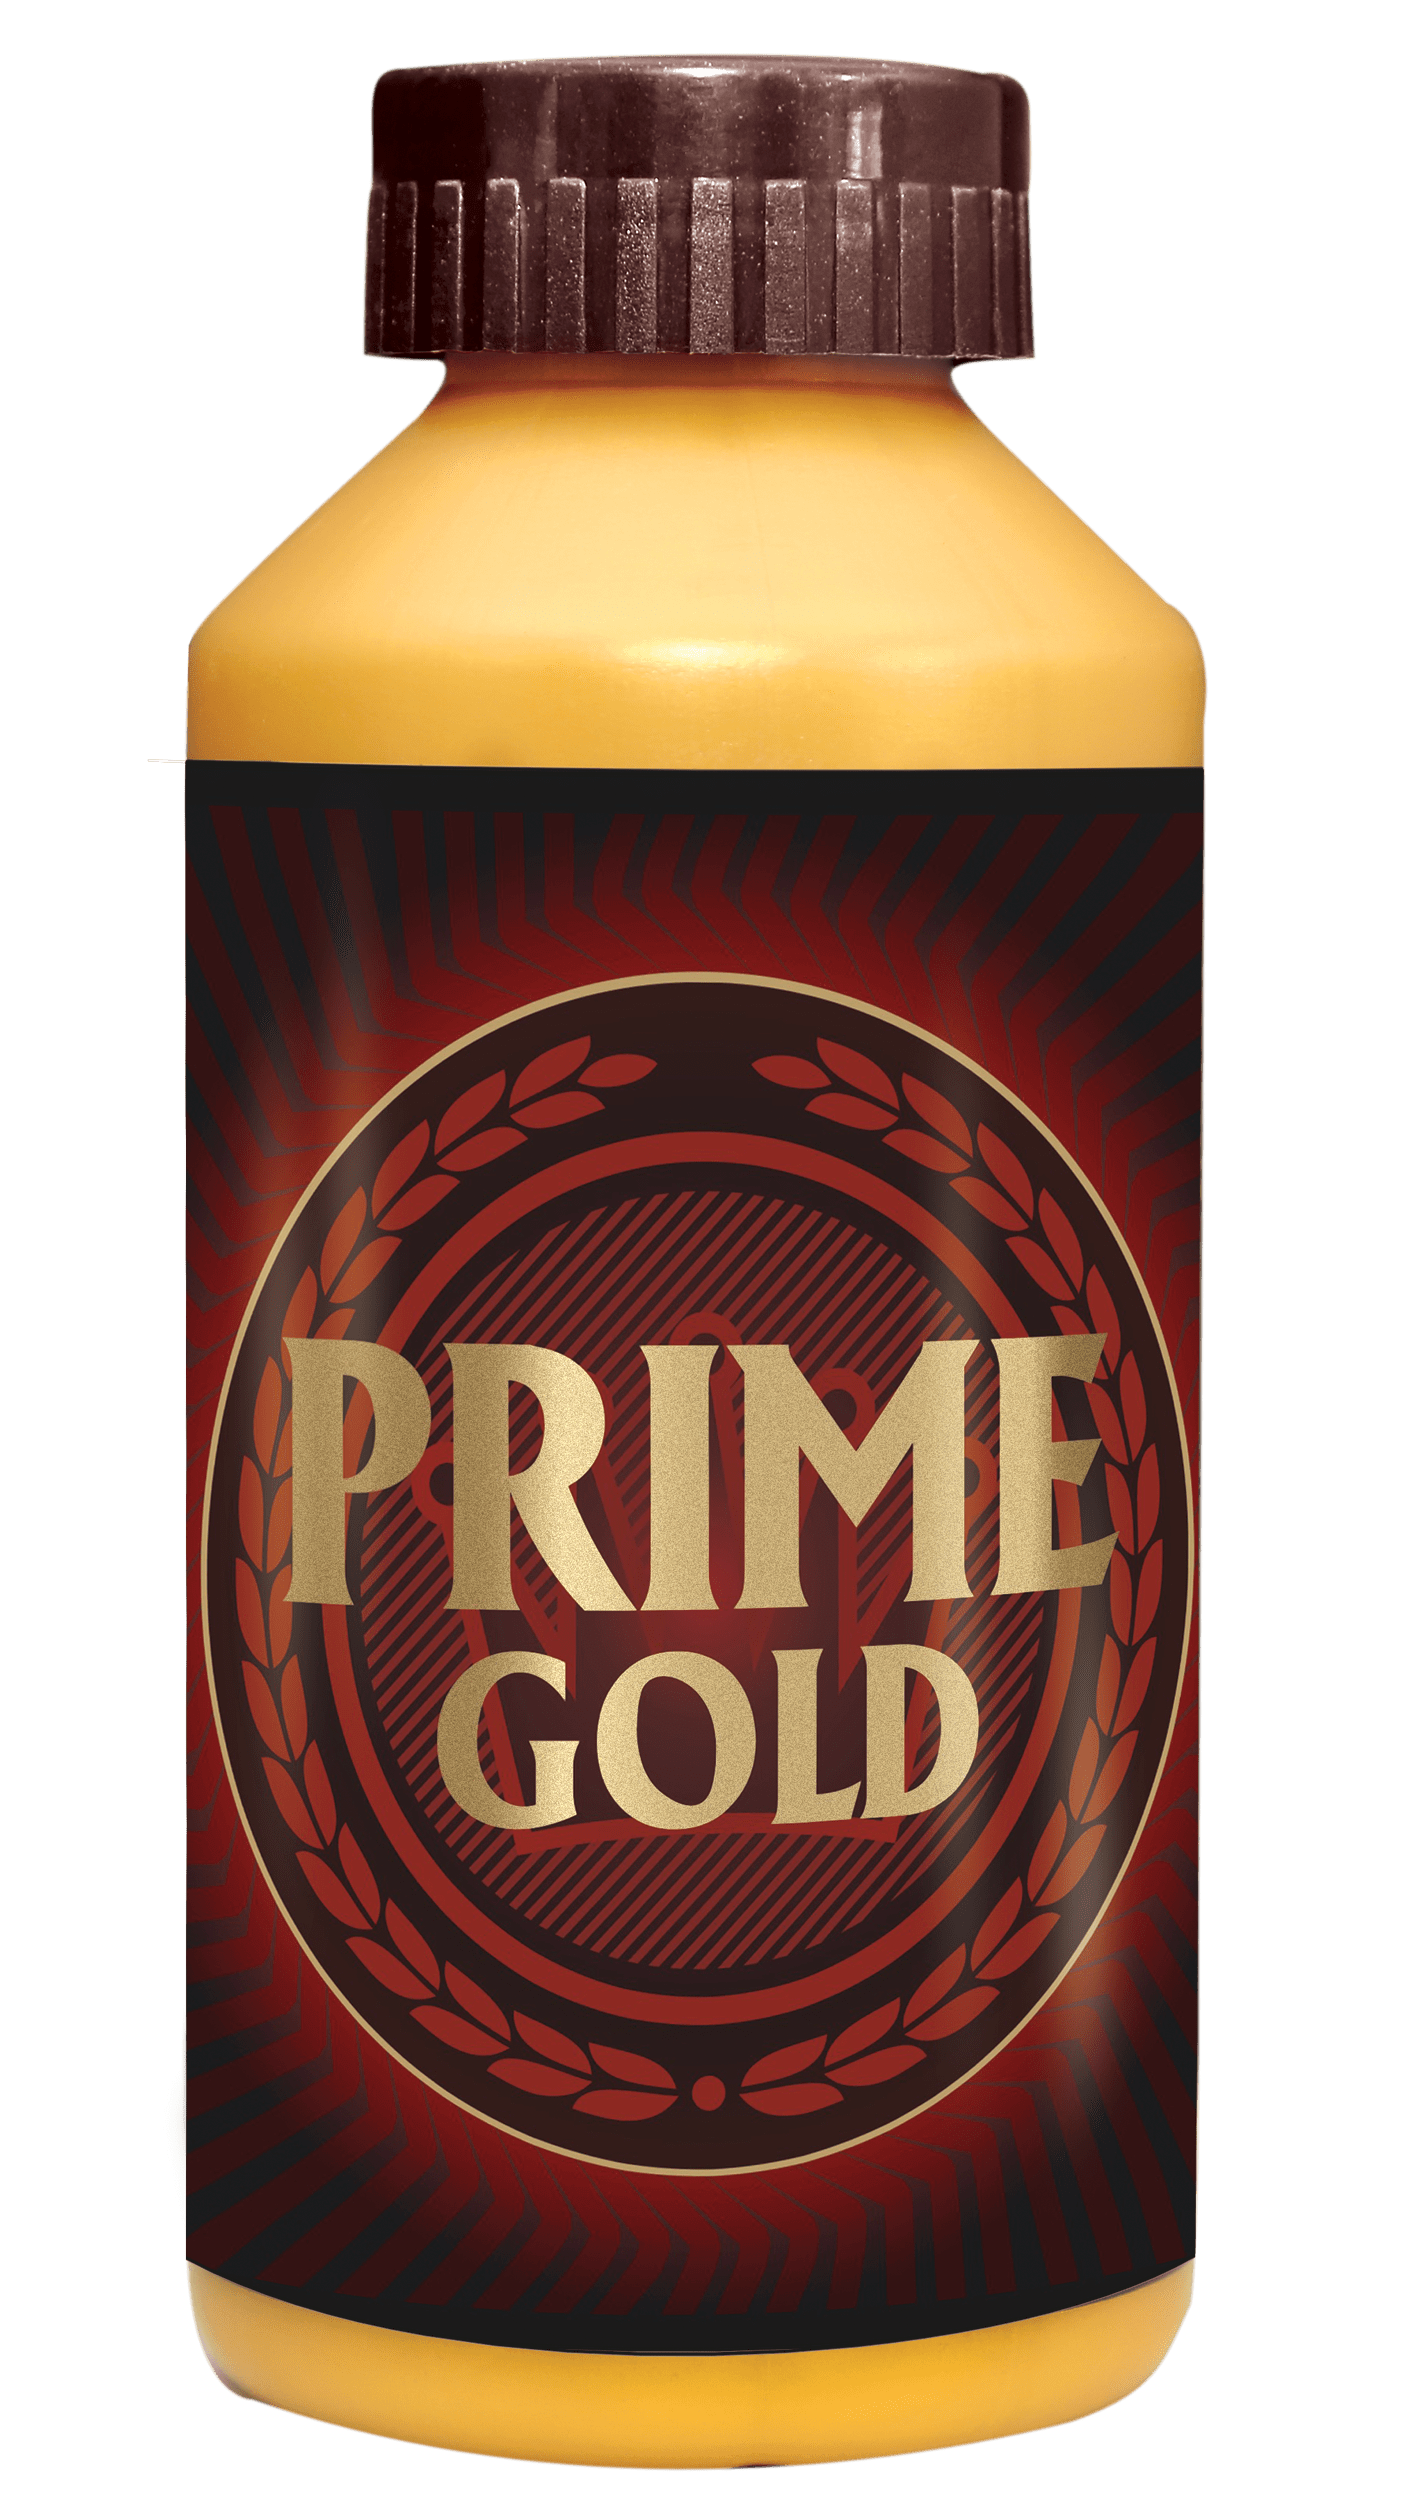 Prime gold